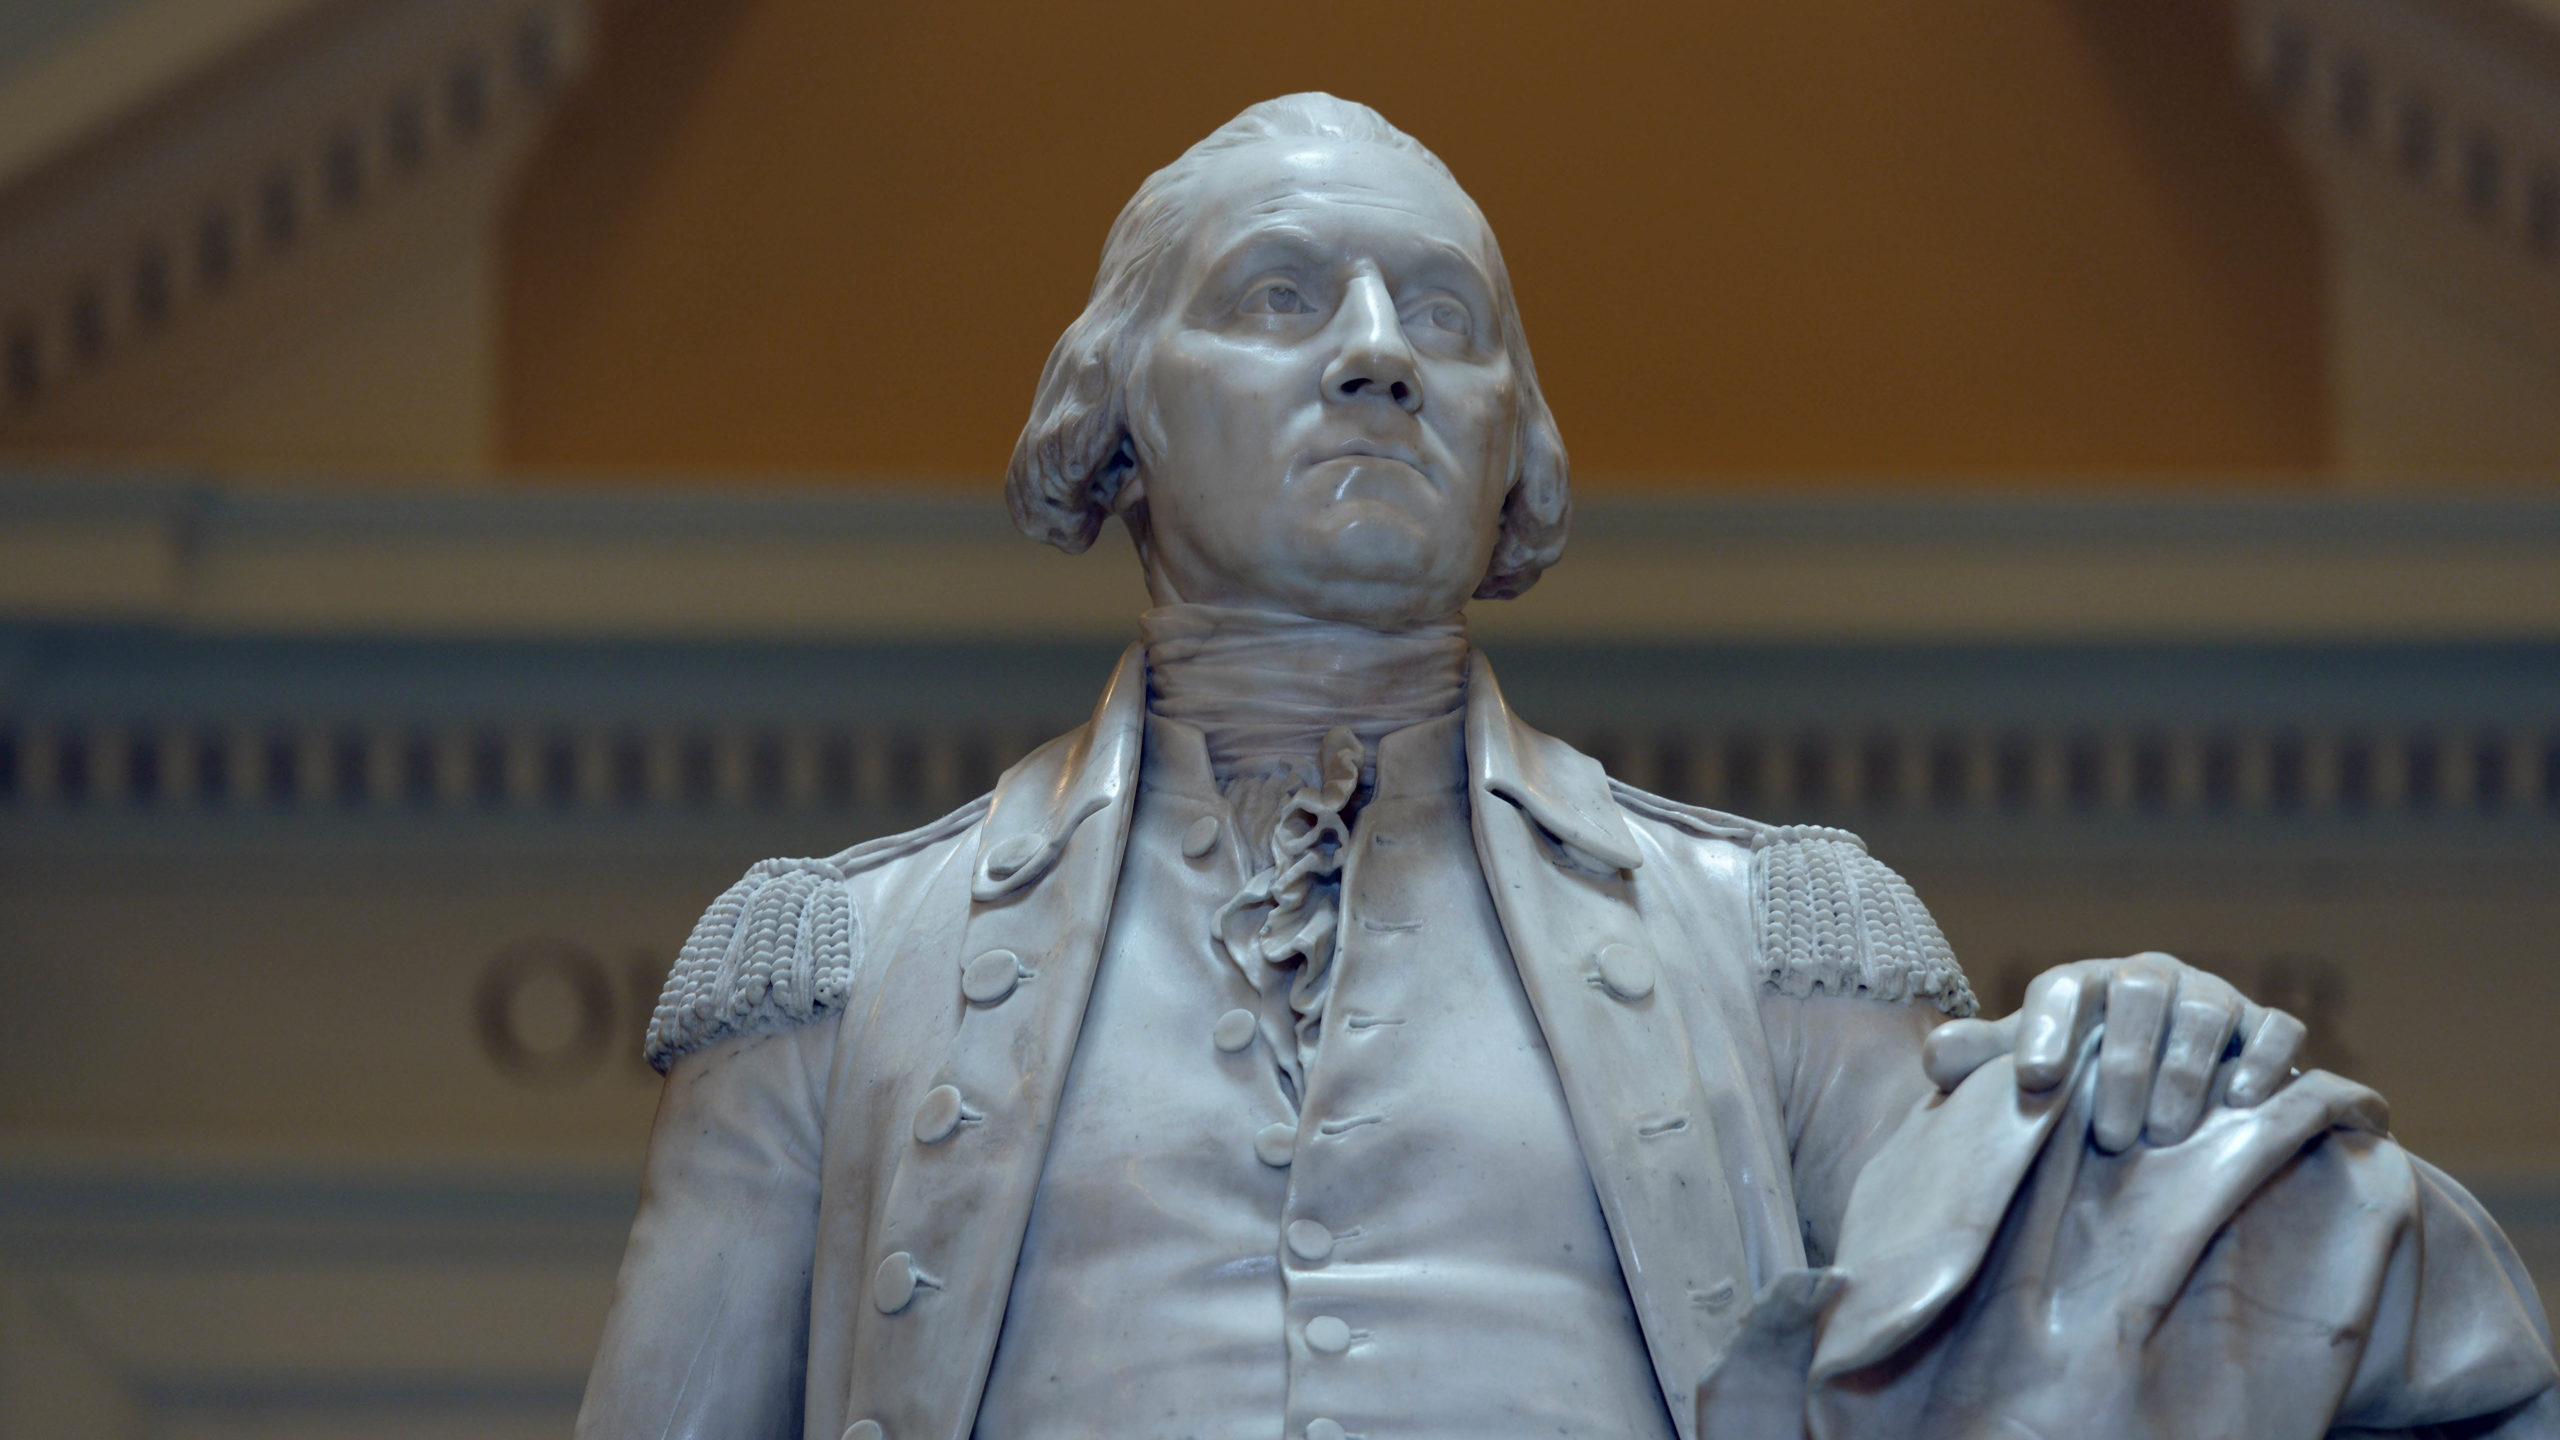 Jean-Antoine Houdon, George Washington, 1788-92, marble, 6' 2" high (State Capitol, Richmond, Virginia)